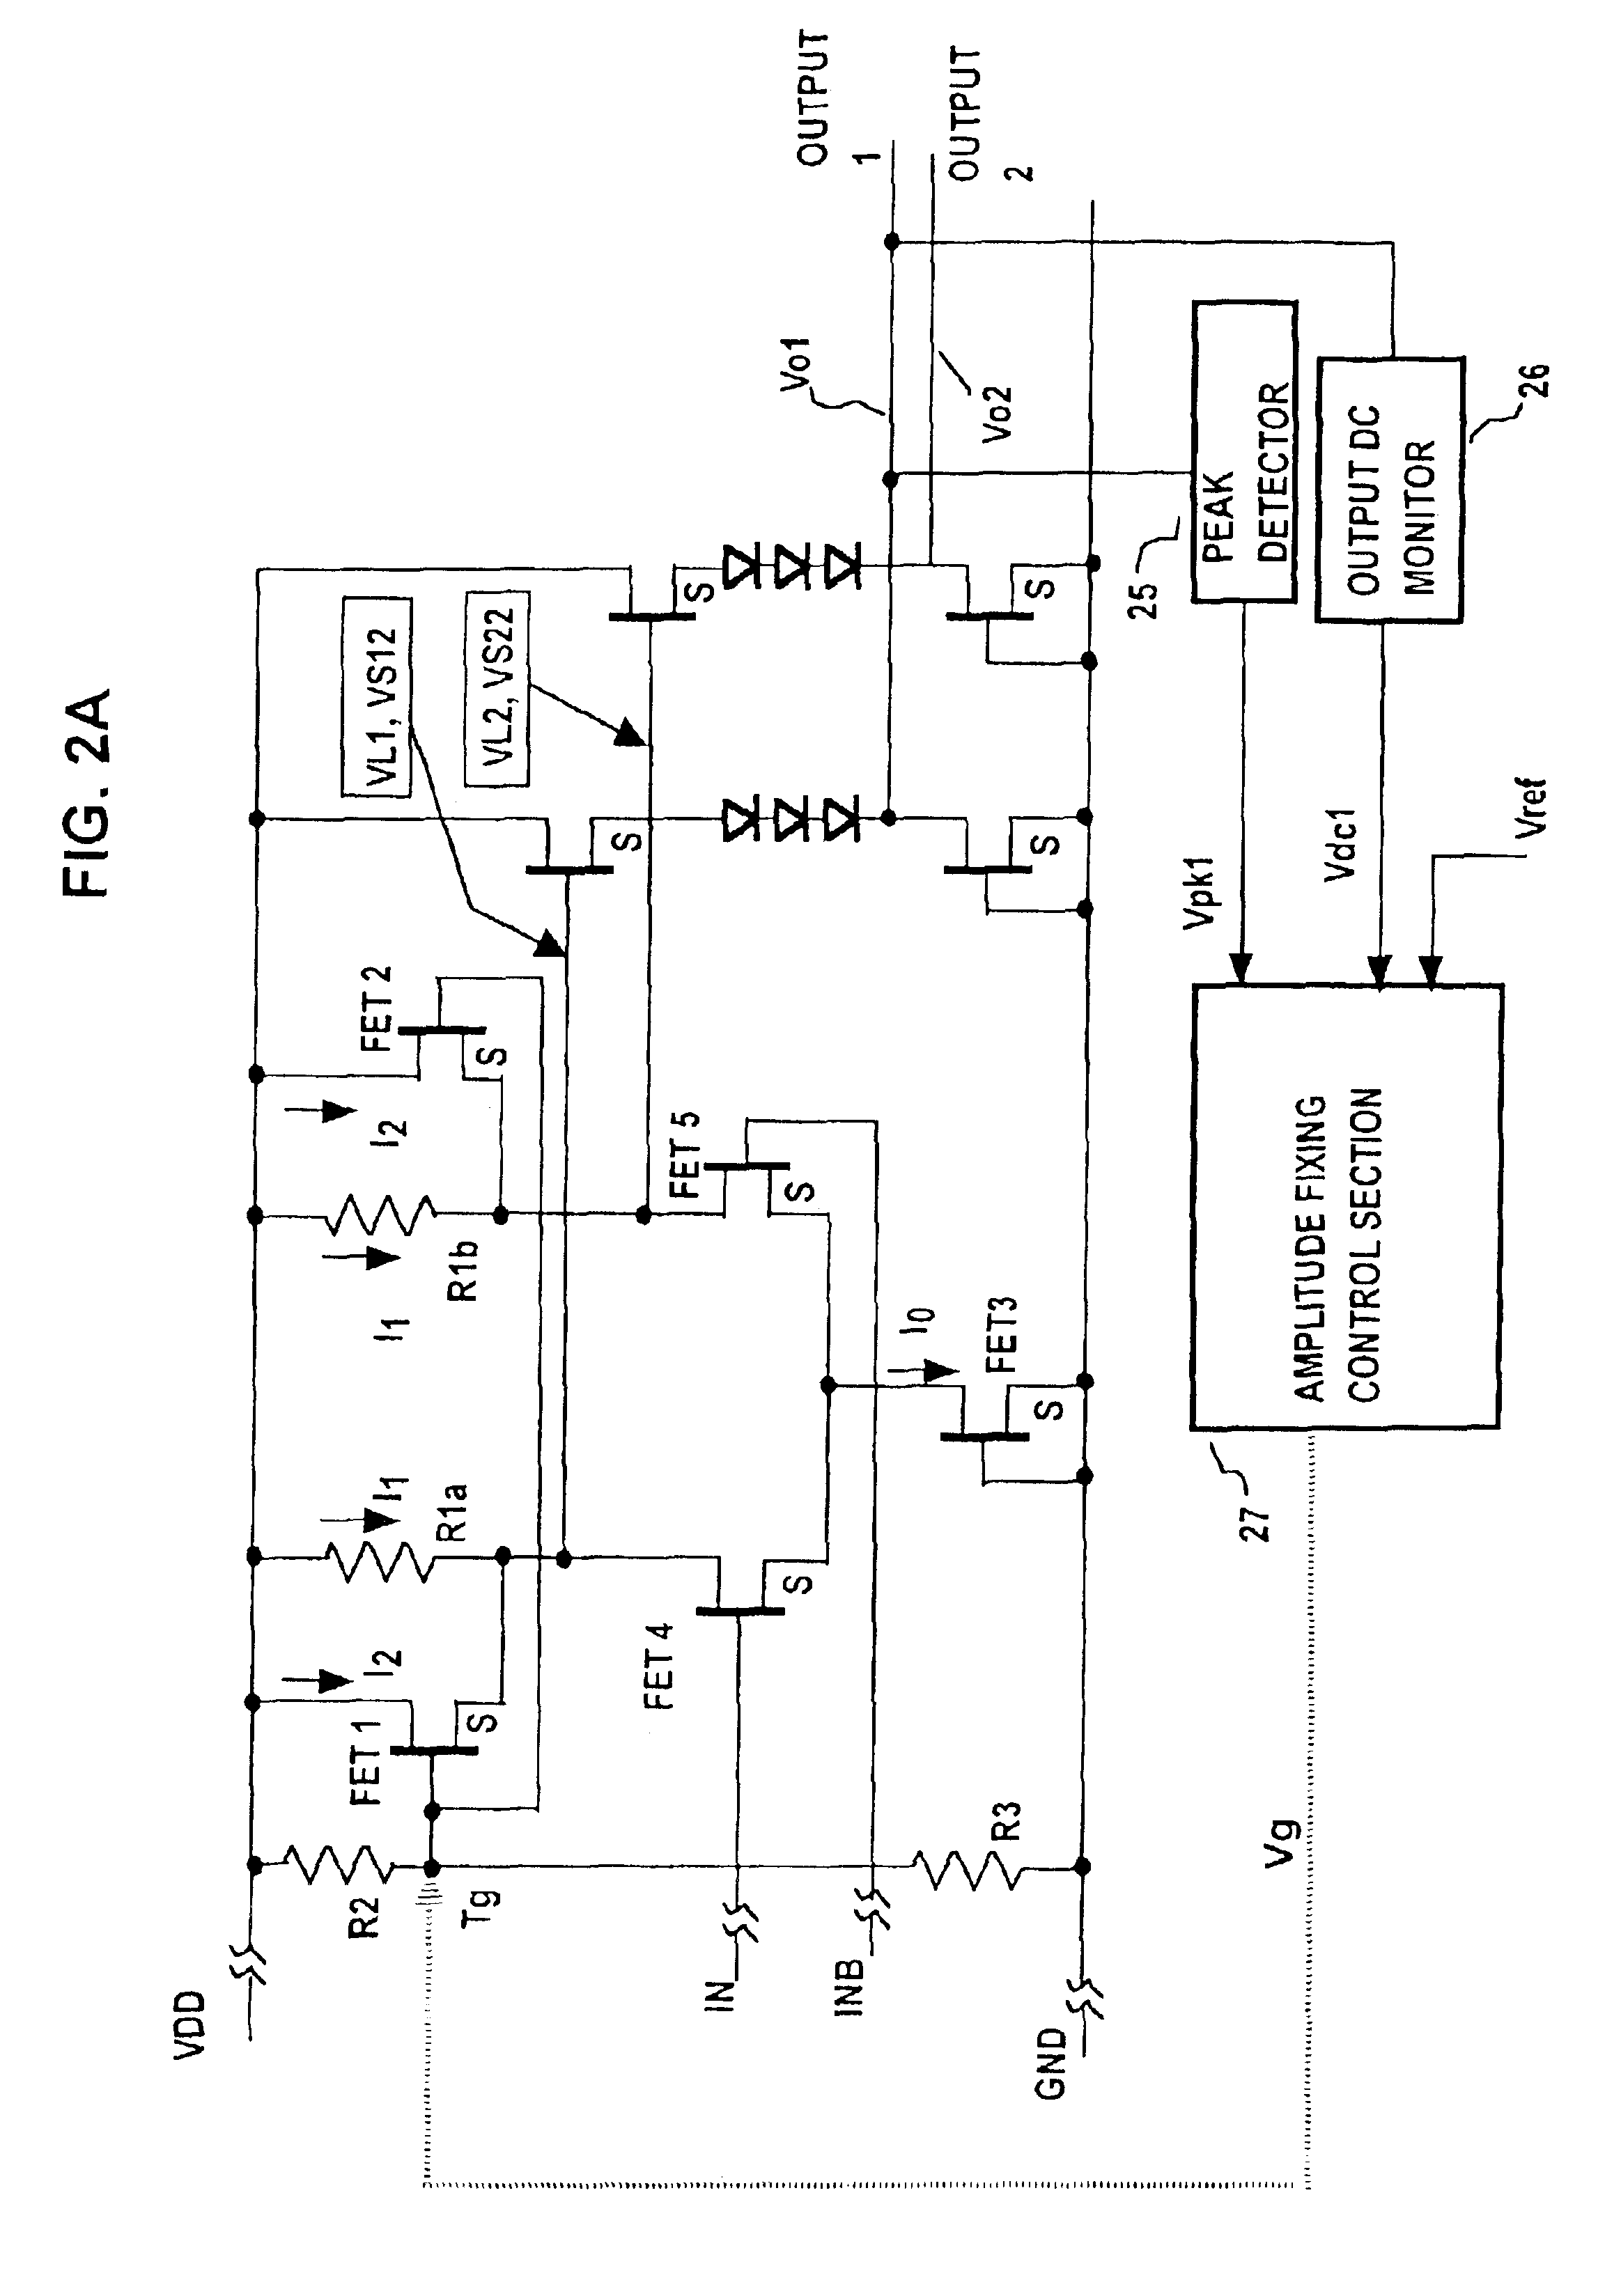 AGC circuit providing control of output signal amplitude and of output signal DC level